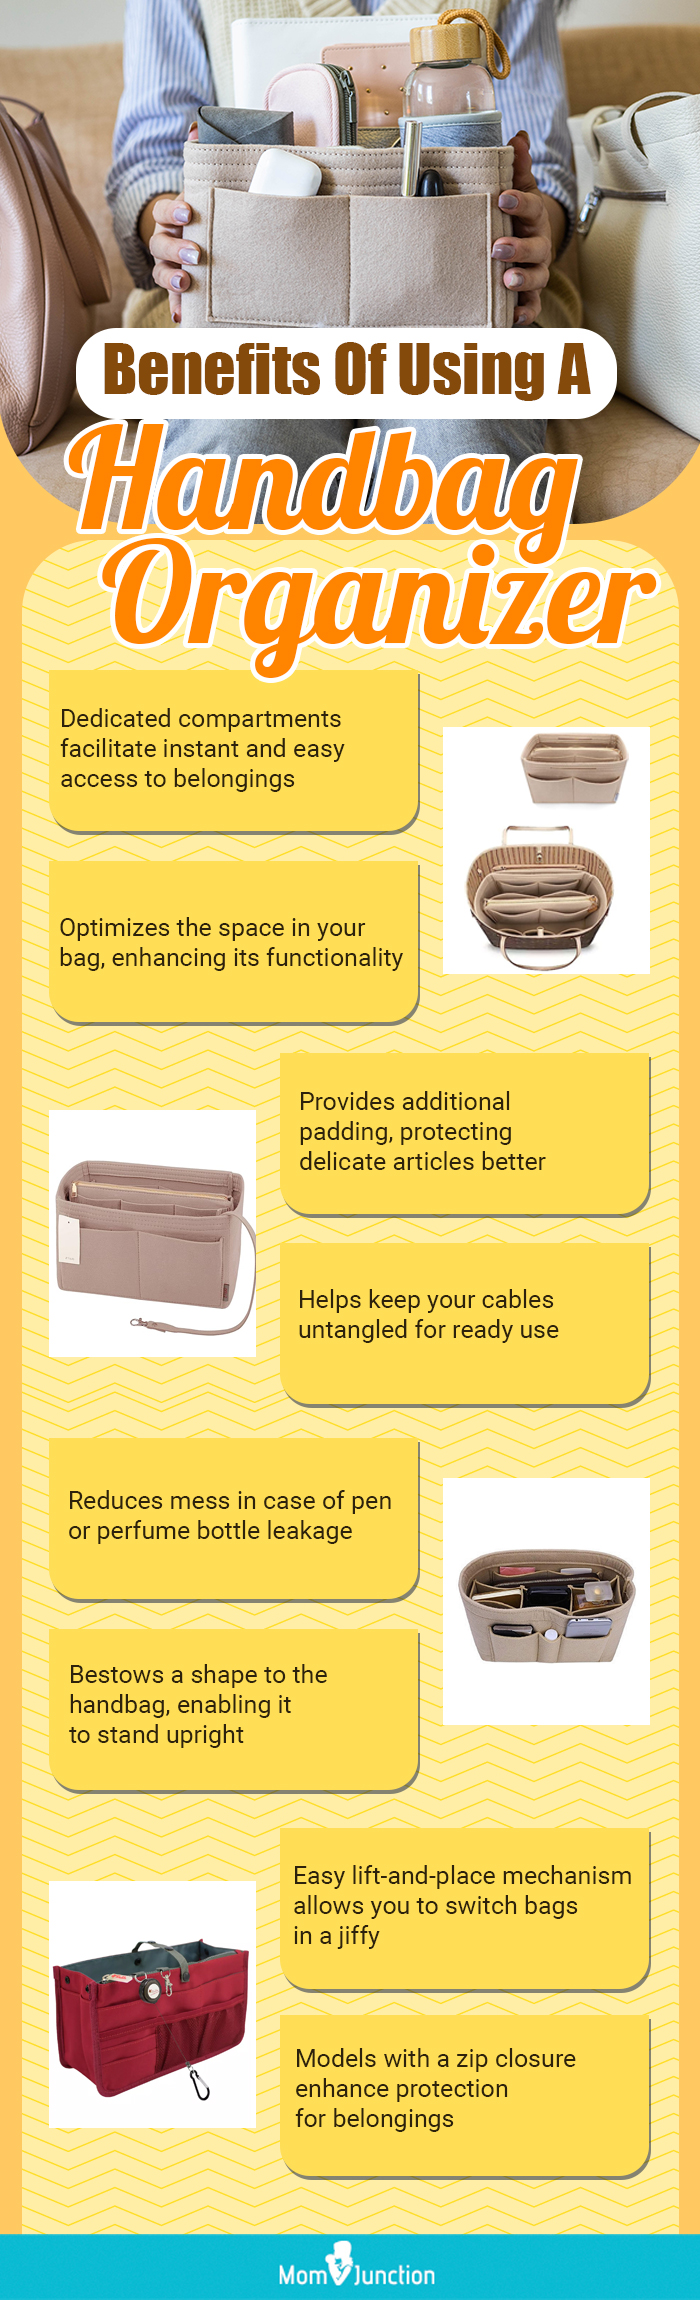 Benefits Of Using A Handbag Organizer (infographic)